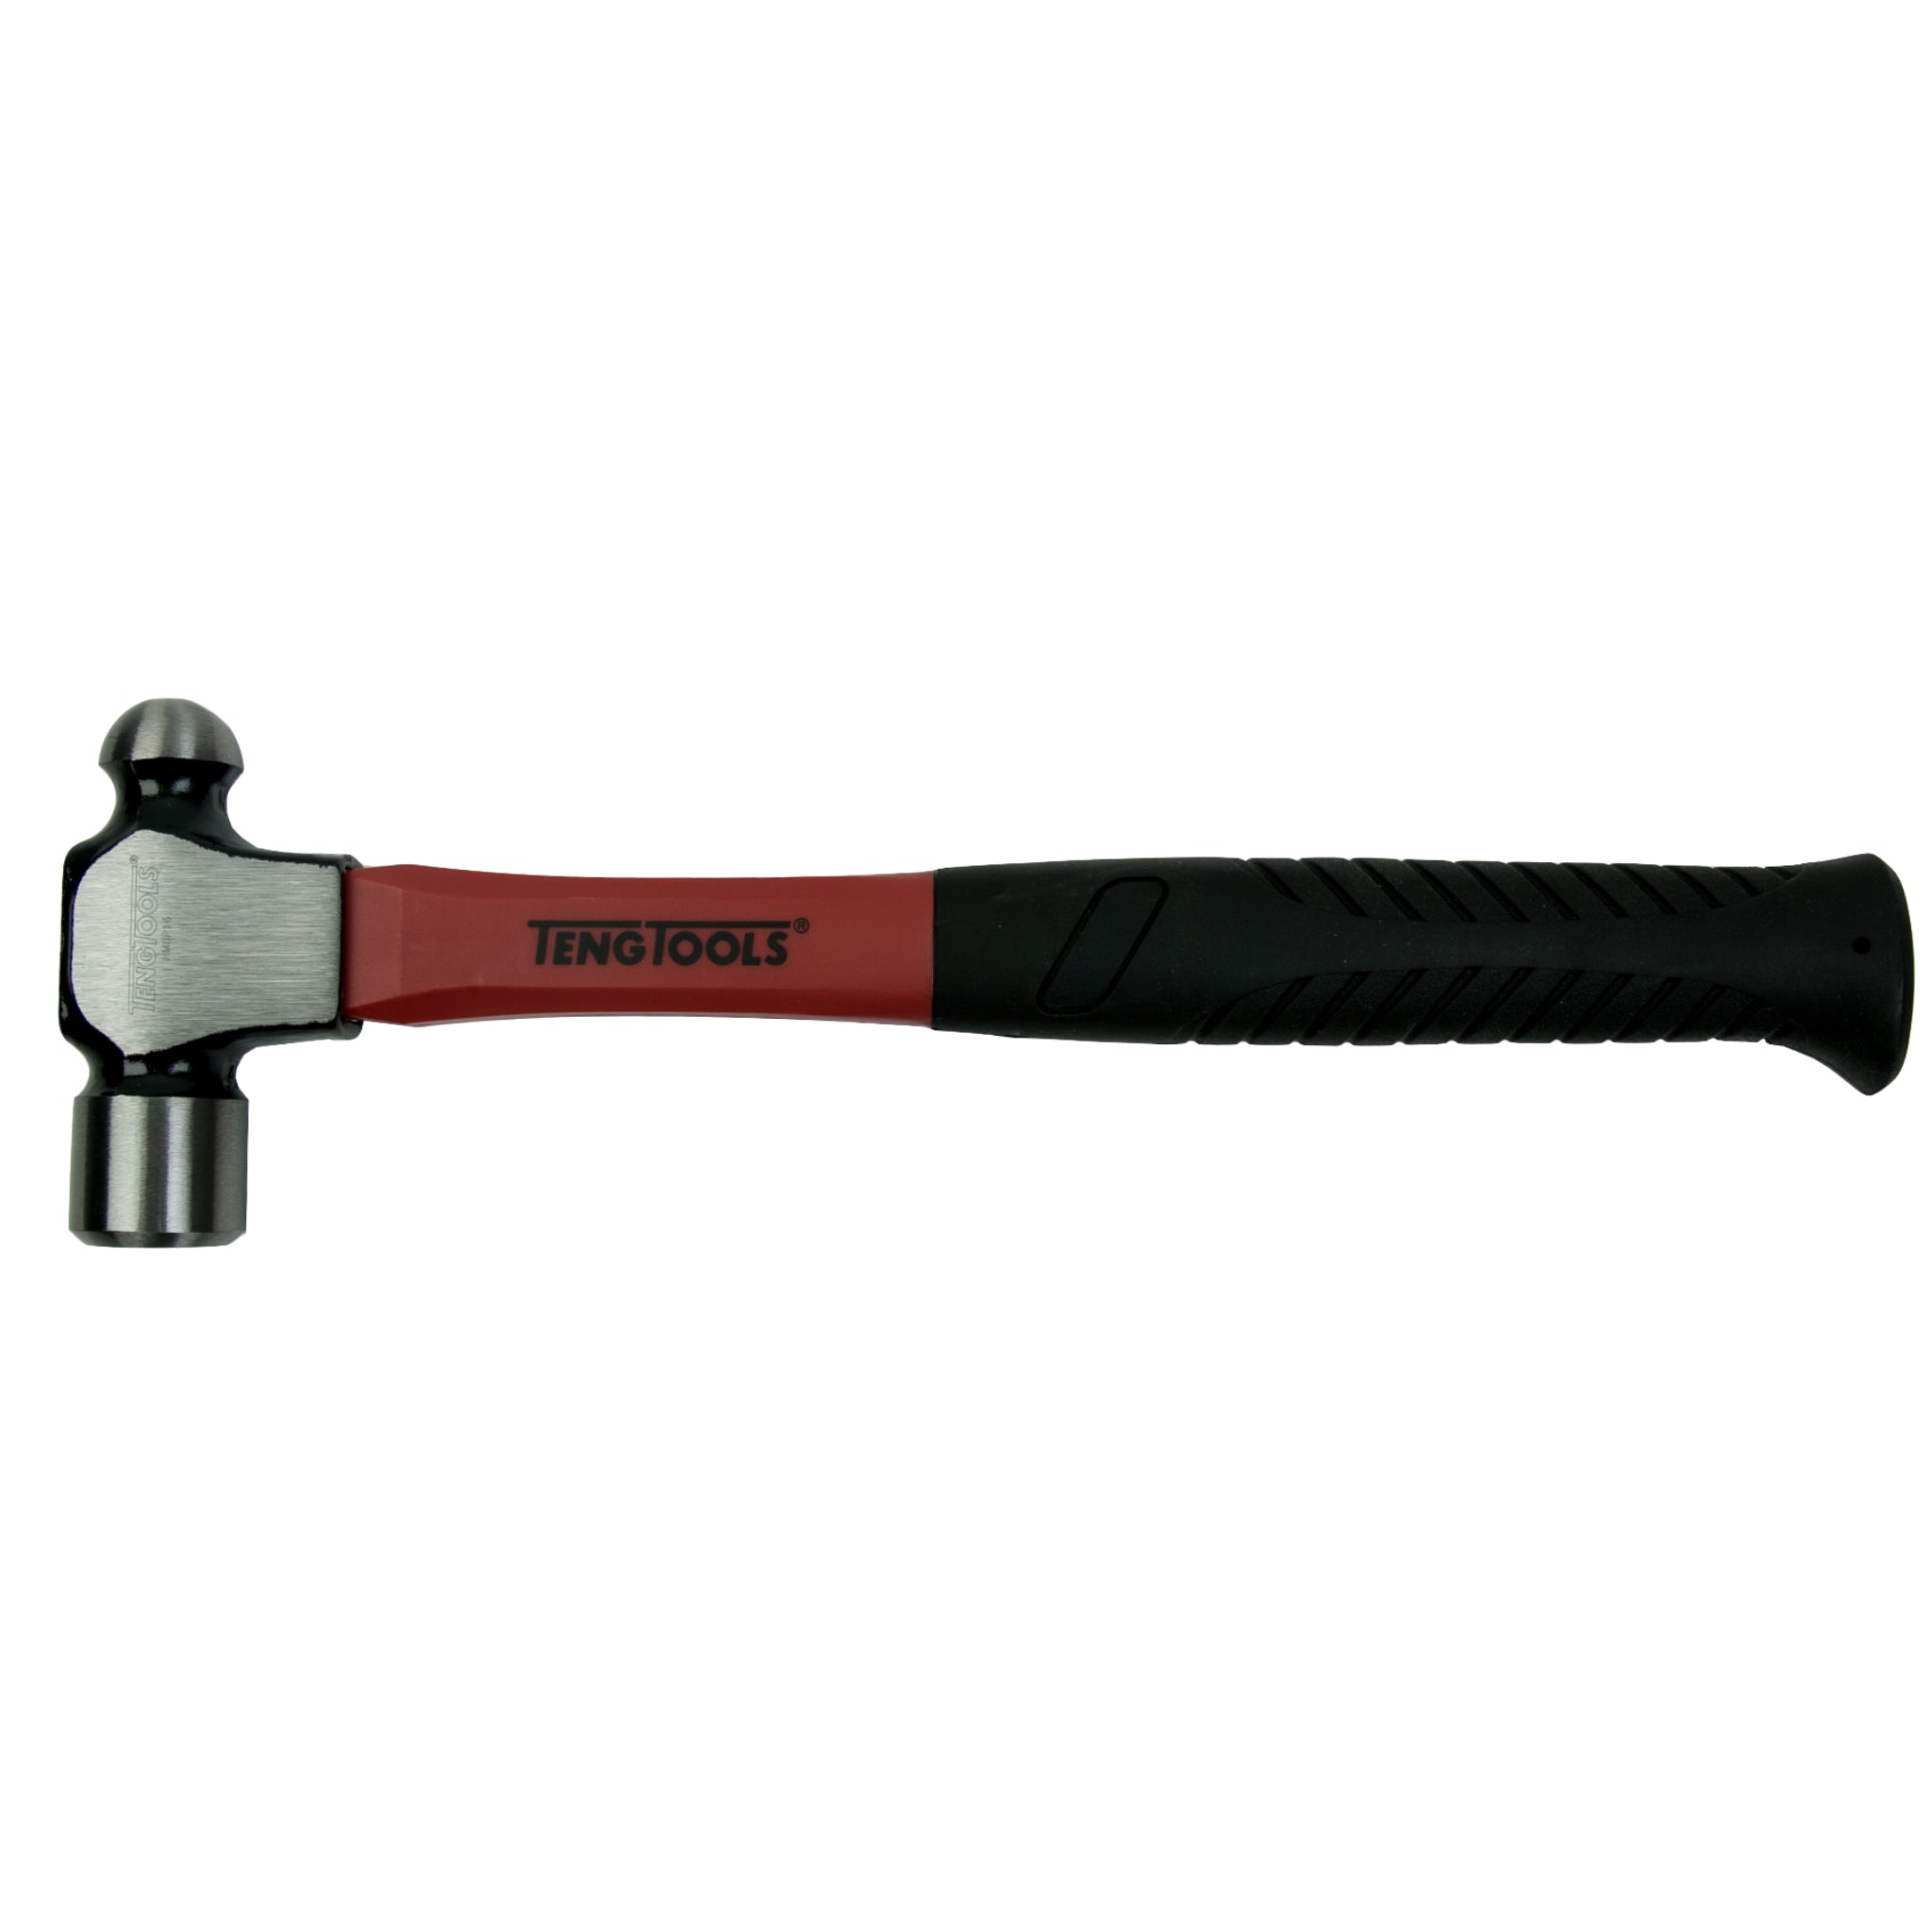 Teng Tools Ball Pein Hammer Range 12, 16, 24 And 32 Ounce (Oz) Hammers - 16 Oz